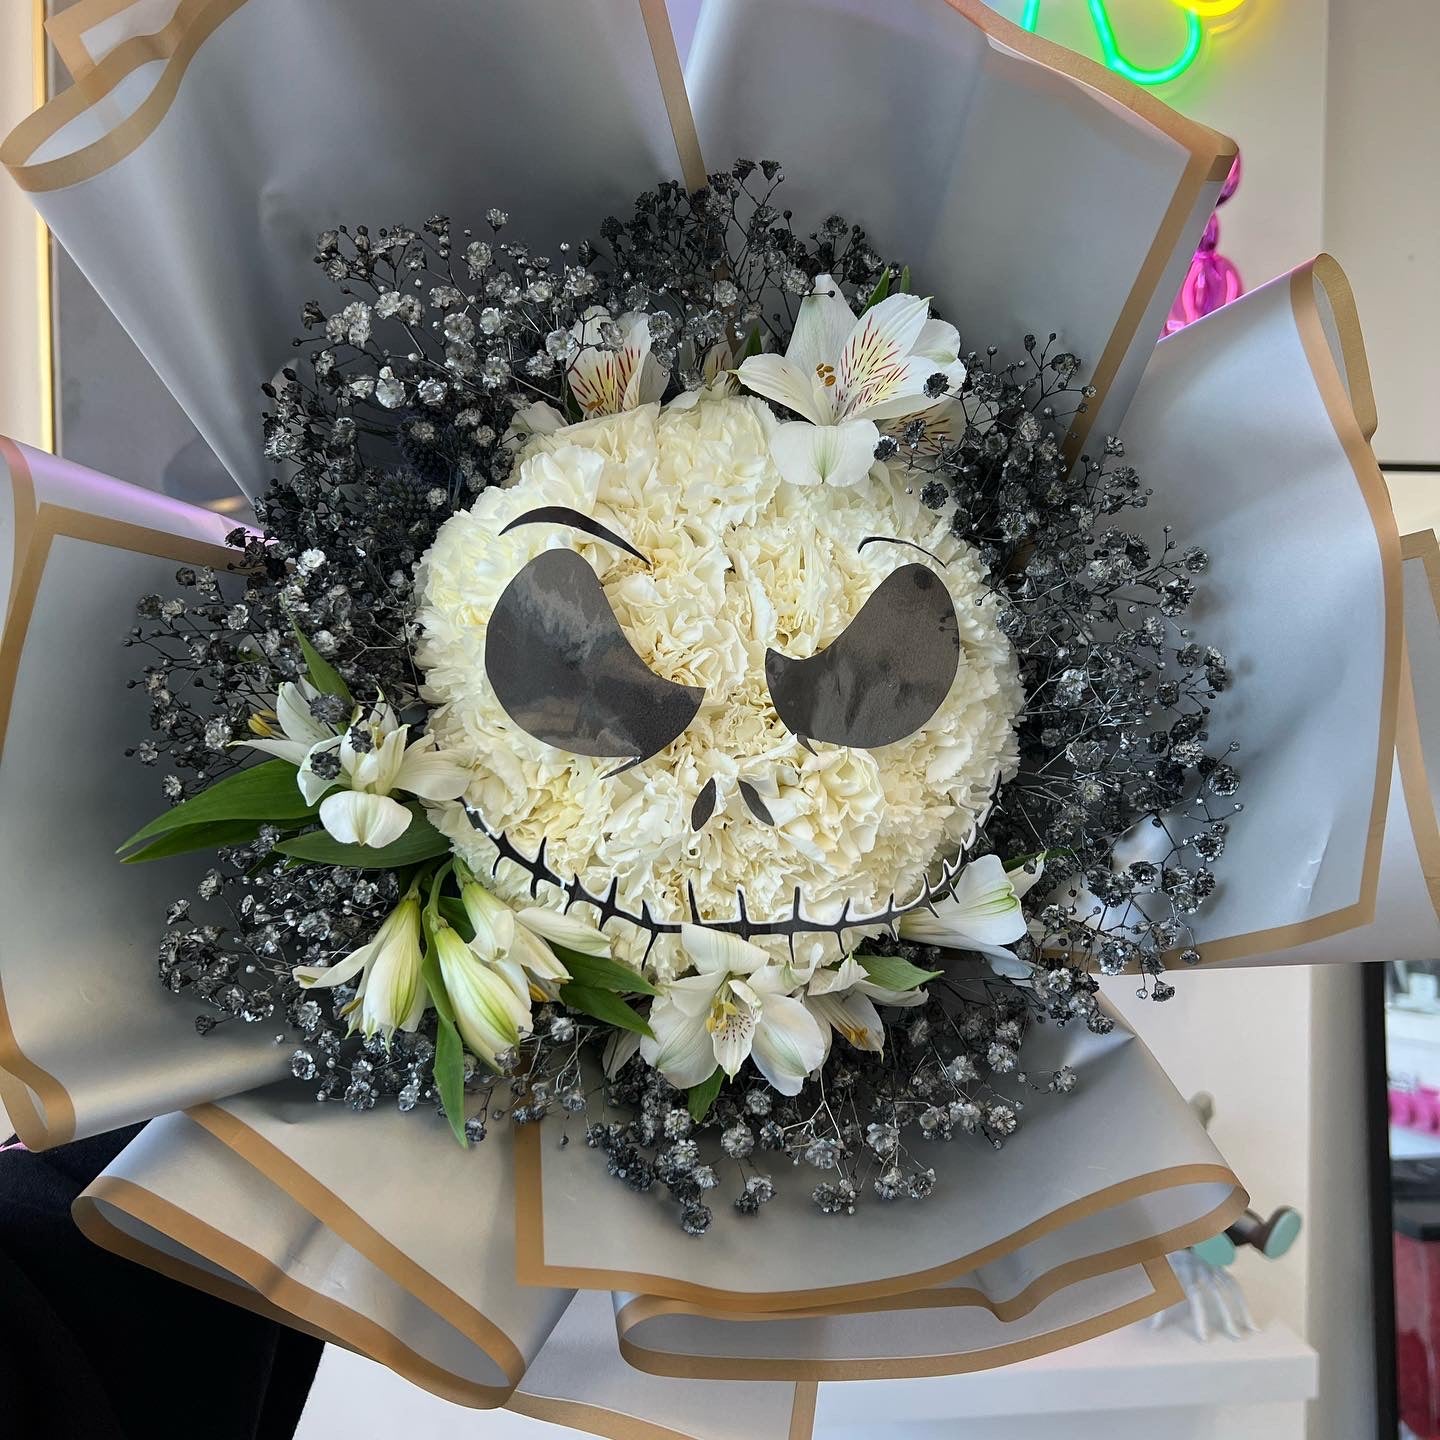 Jack the Skeleton Spooky Bouquet